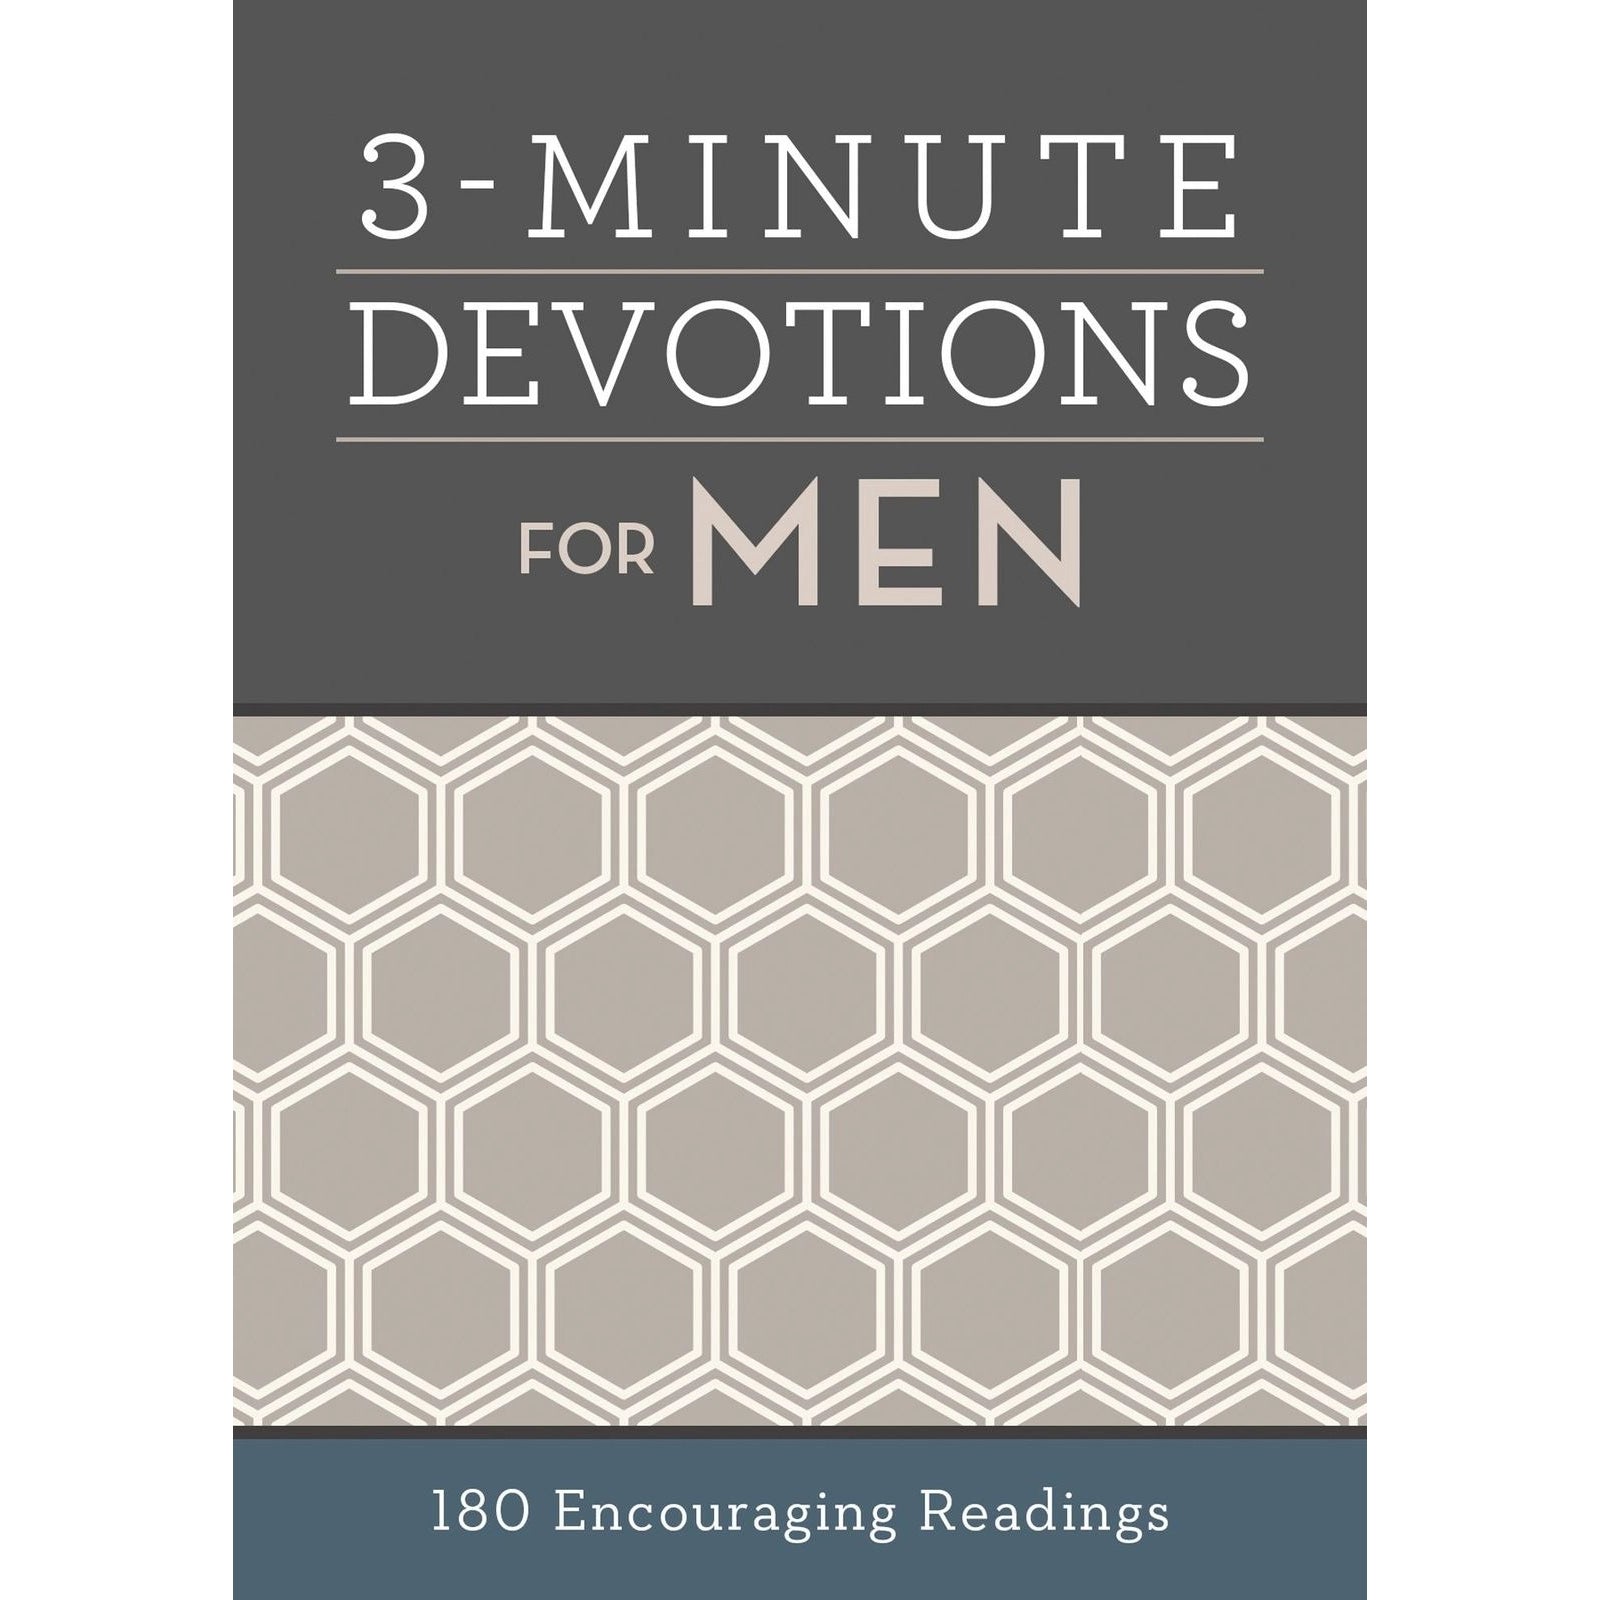 3-Minute Devotionals for Men